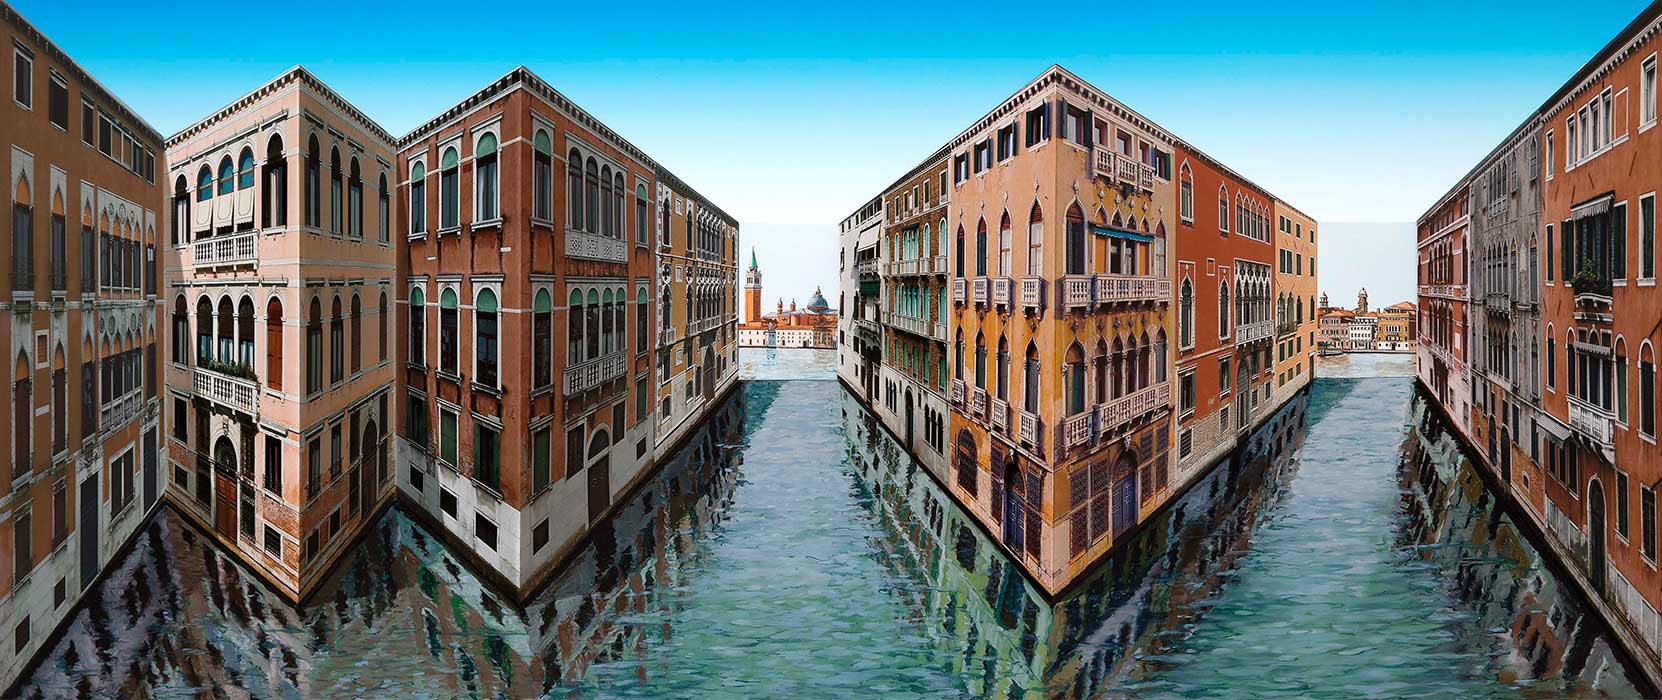 Venise en reperspective